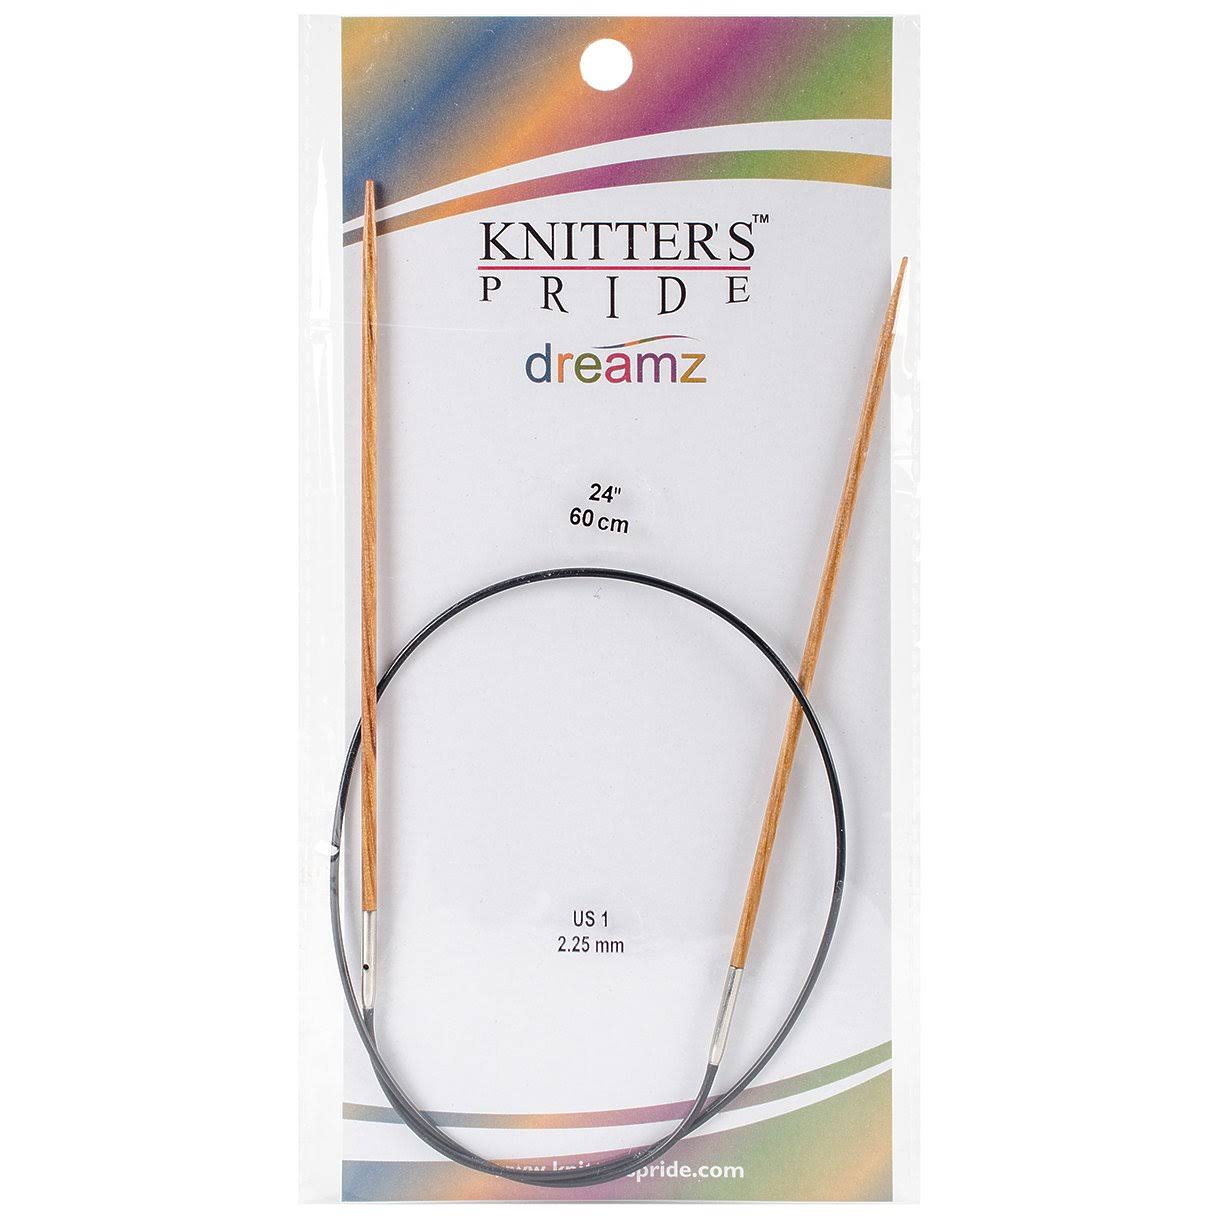 Knitter's Pride 1/2.25mm Dreamz Fixed Circular Needles, 24"